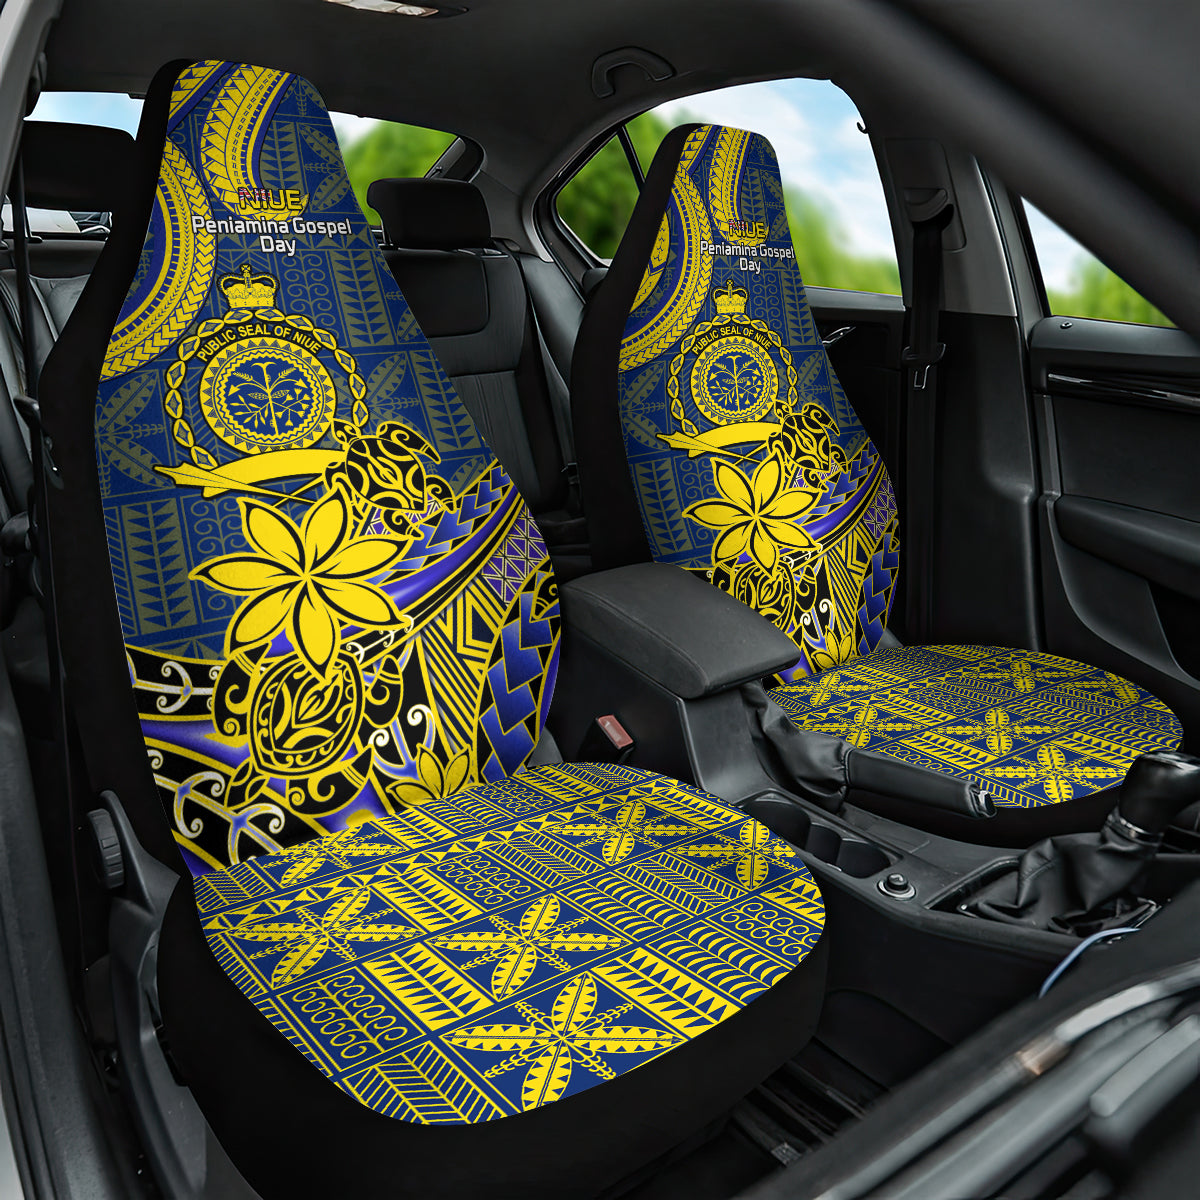 Niue Peniamina Gospel Day Car Seat Cover Unique Niean Hiapo LT14 One Size Blue - Polynesian Pride